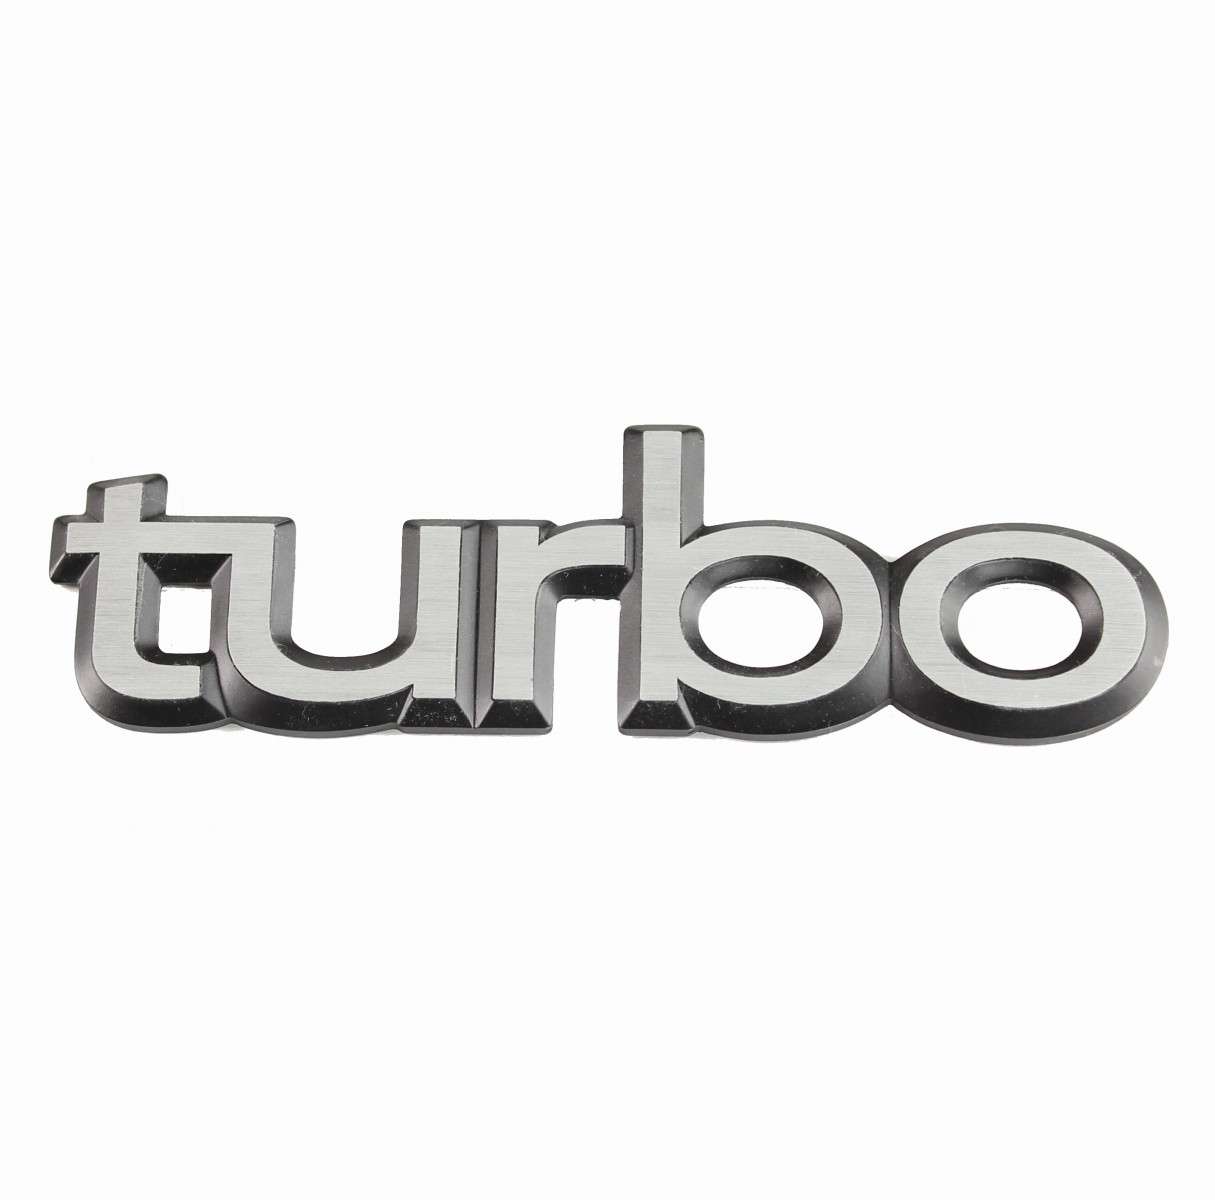 Boot/trunk emblem Turbo for saab 900 3 & 5 doors - SAAB spare